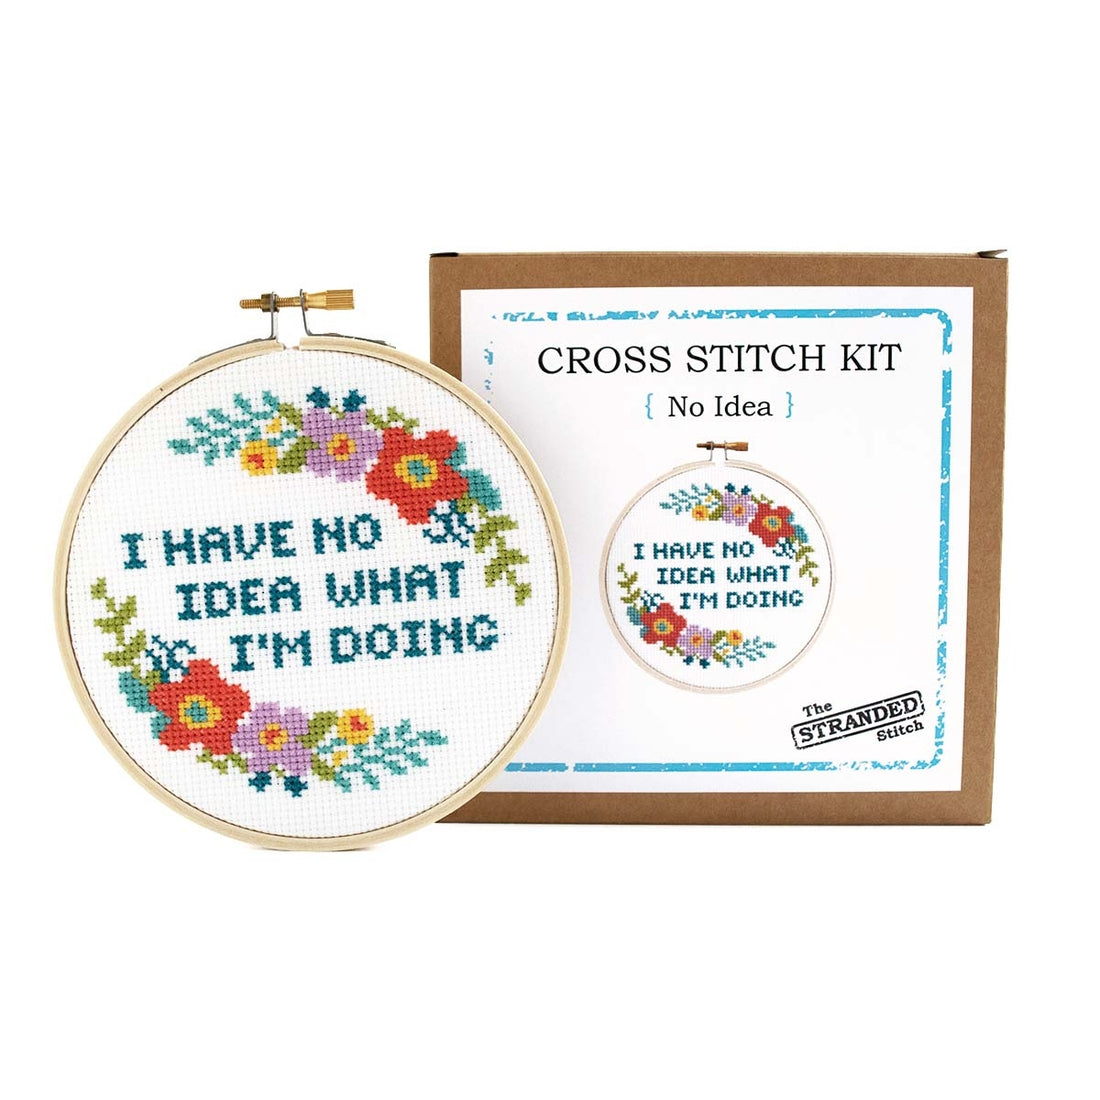 Beginner funny cross stitch kit